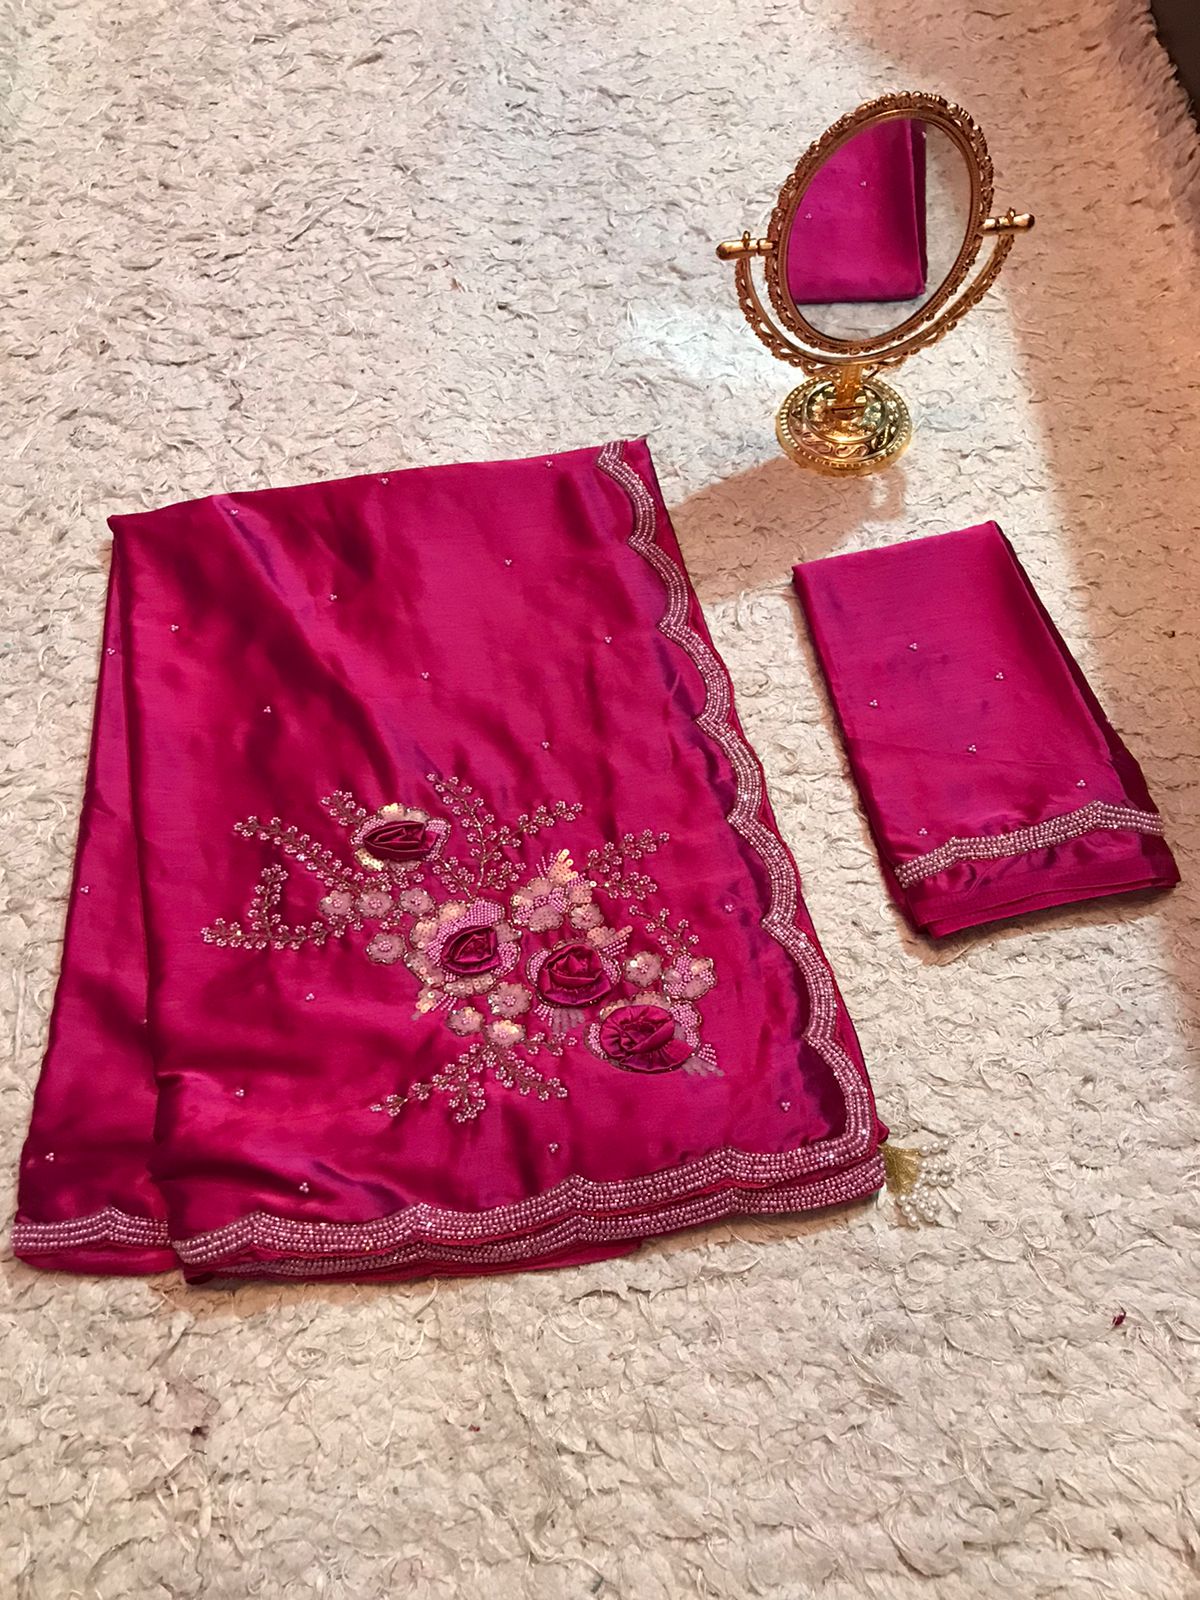 Premium pink satin silk luxury saree